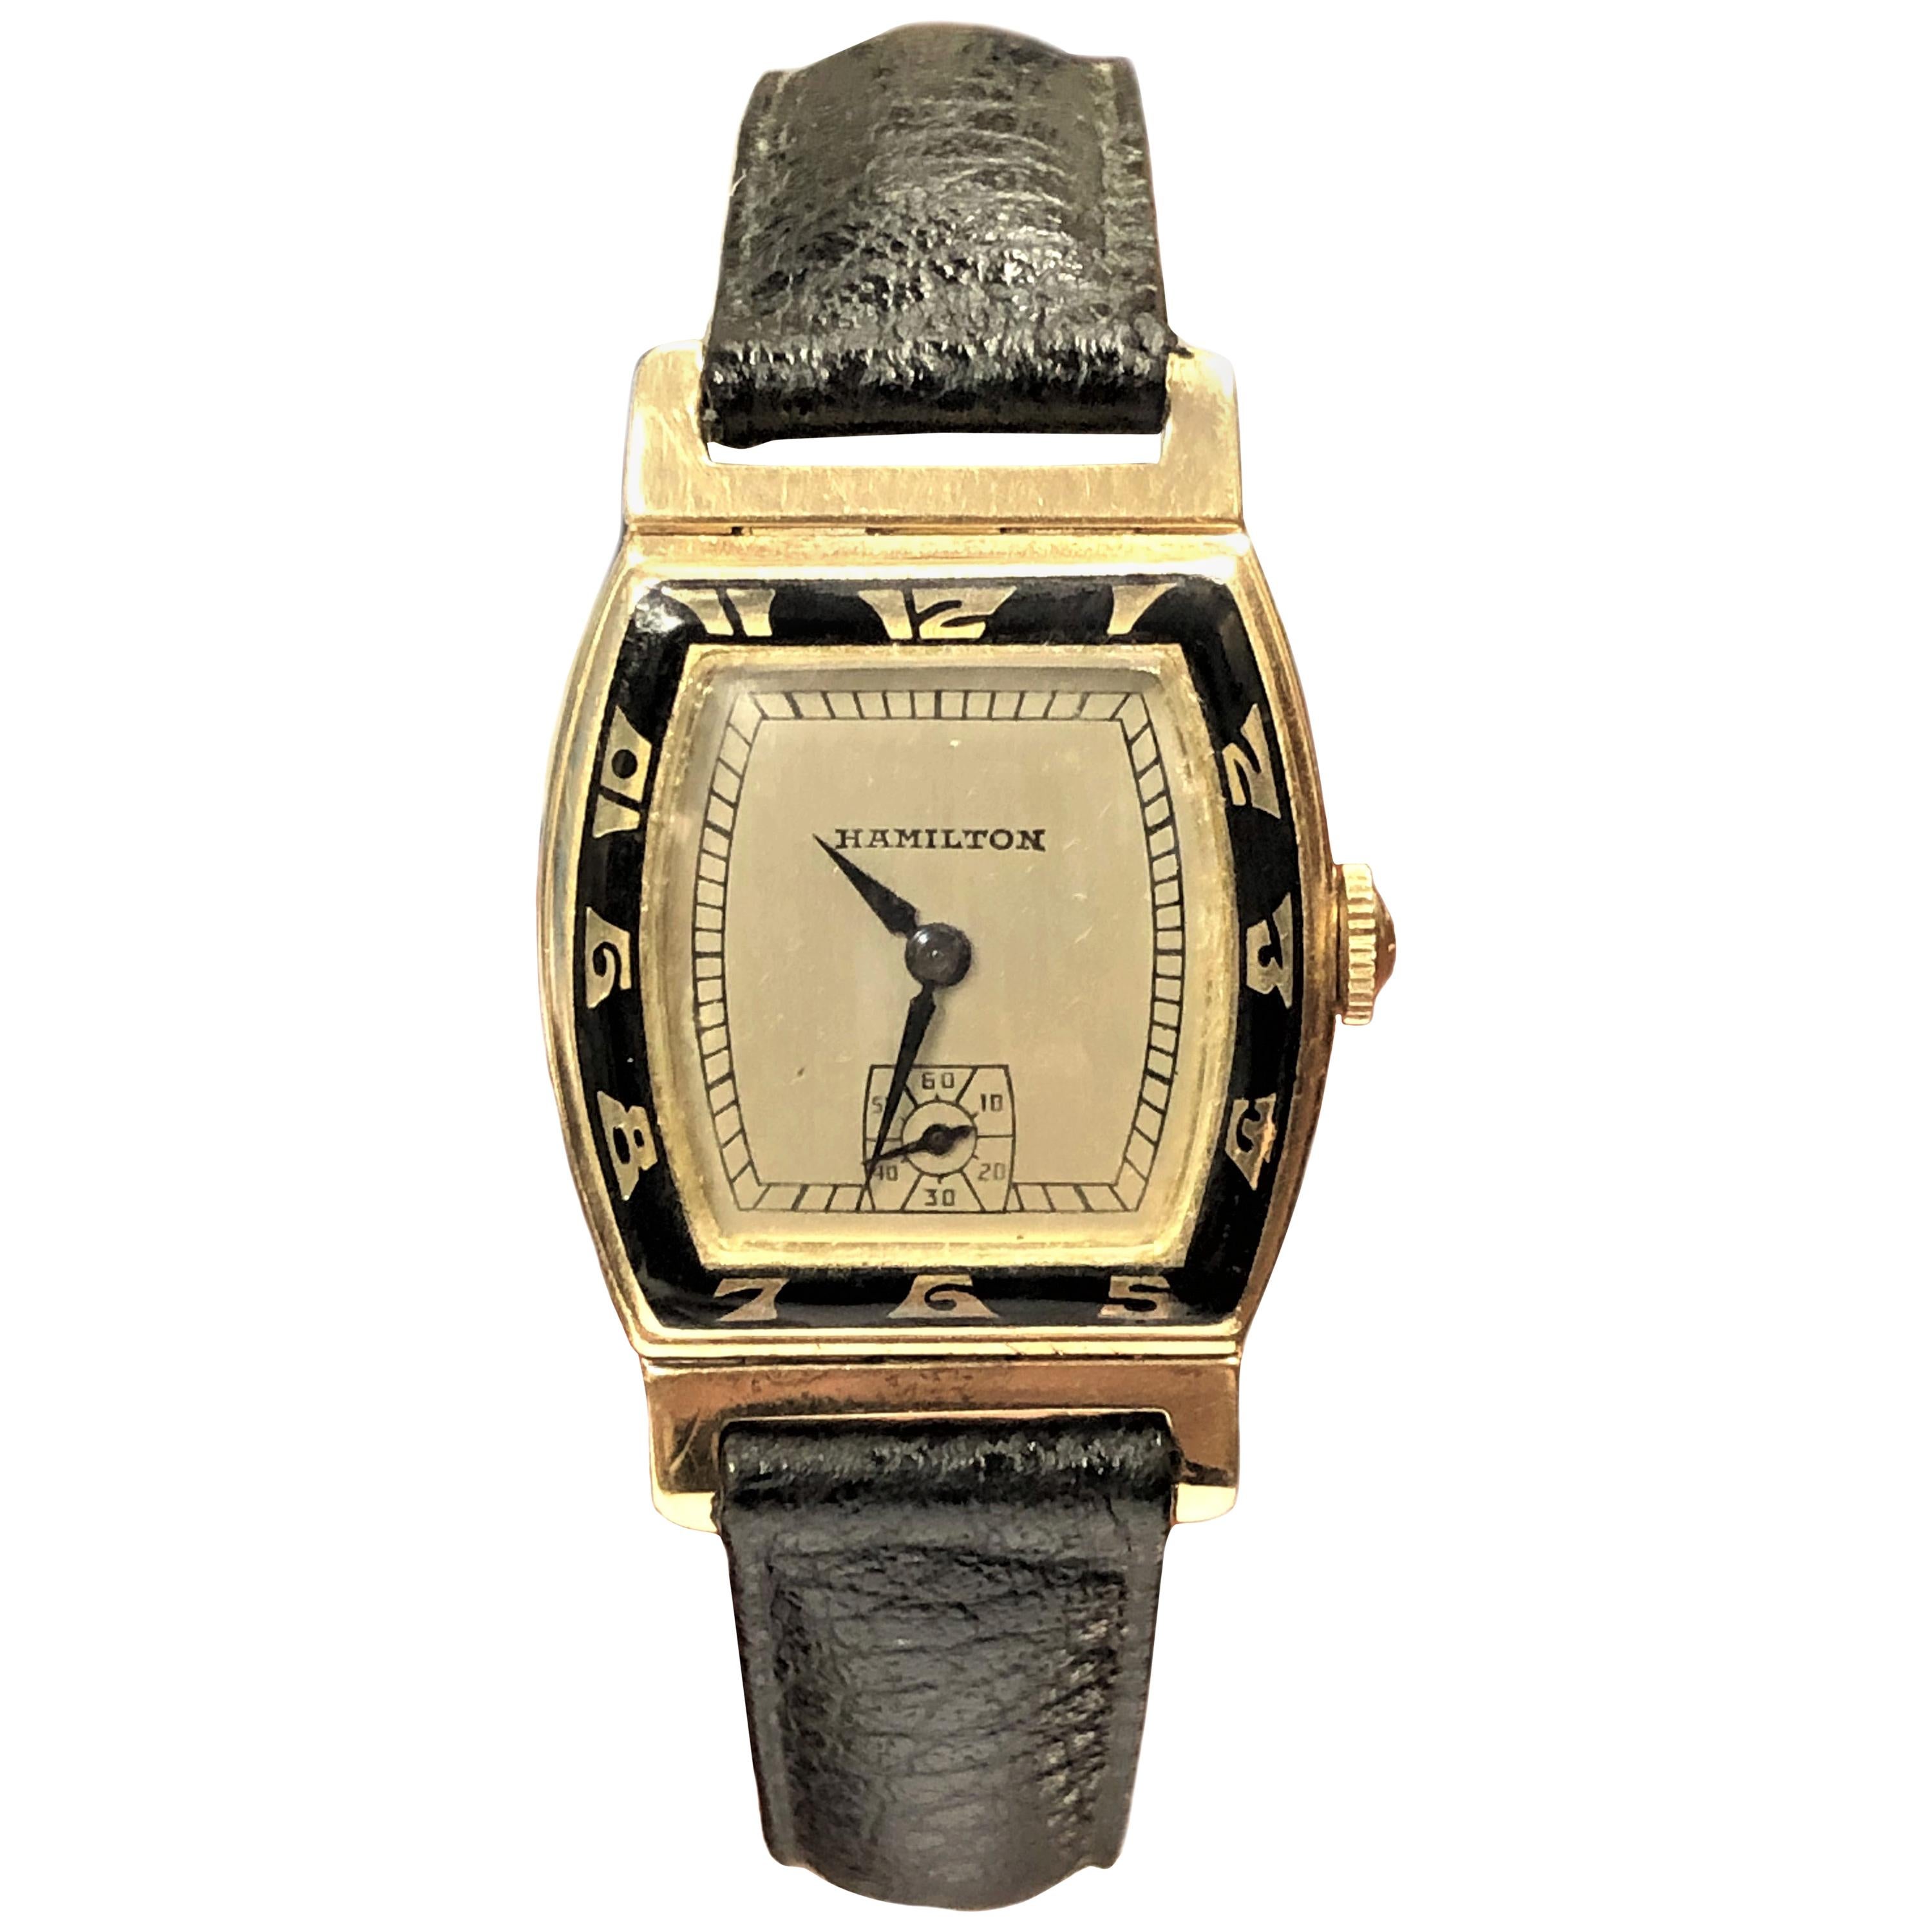 Hamilton Coronado 1930s Gold and Enamel Wristwatch